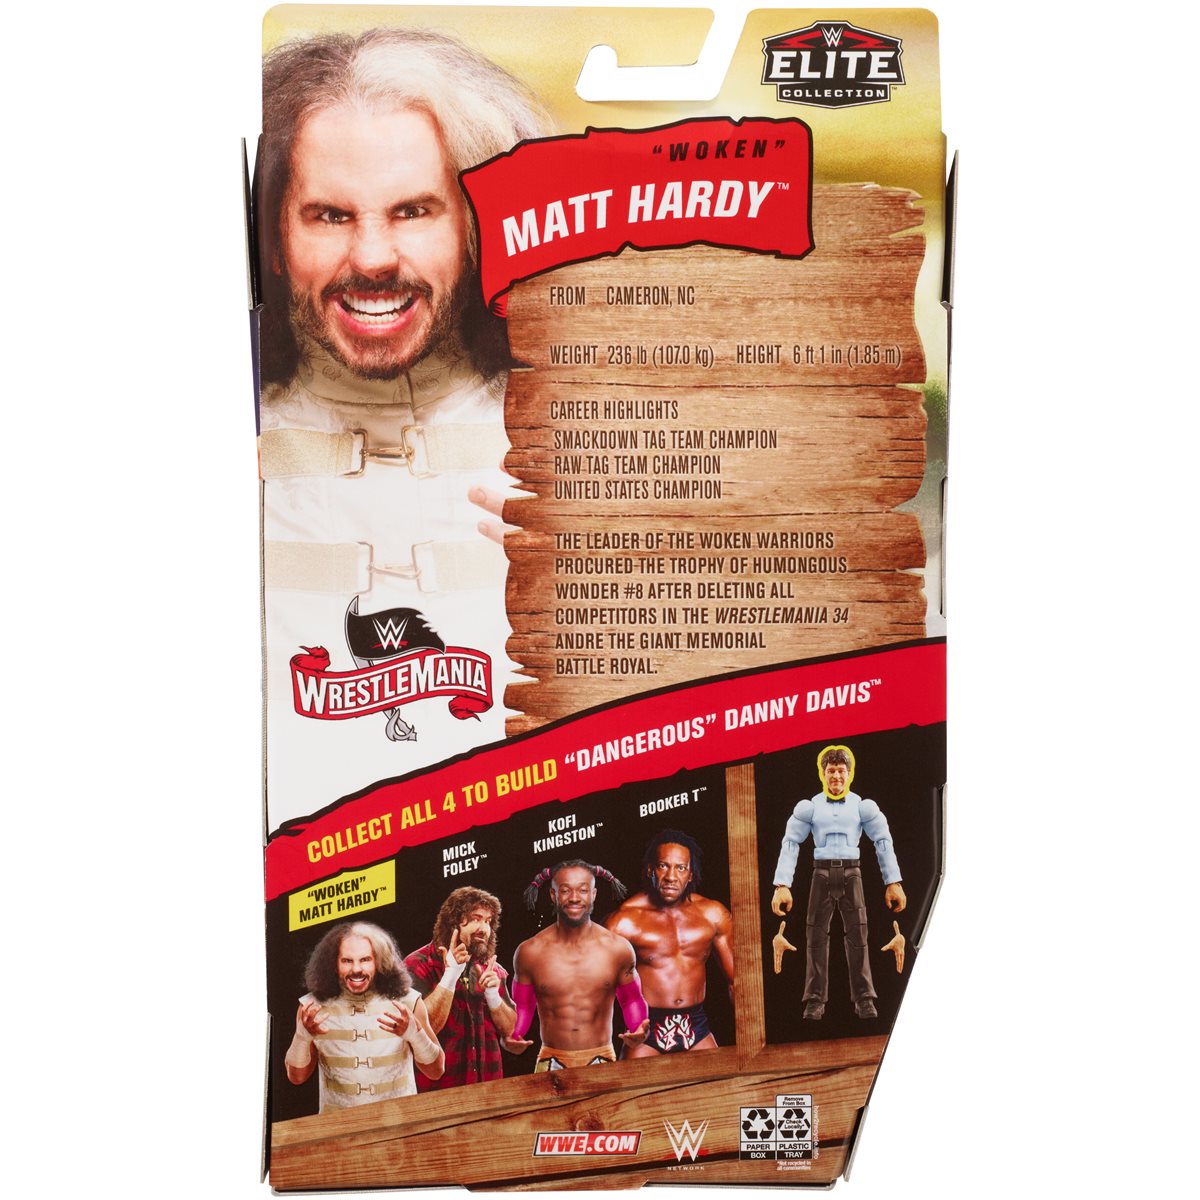 WWE Wrestlemania "Woken" Matt Hardy Action Figure 